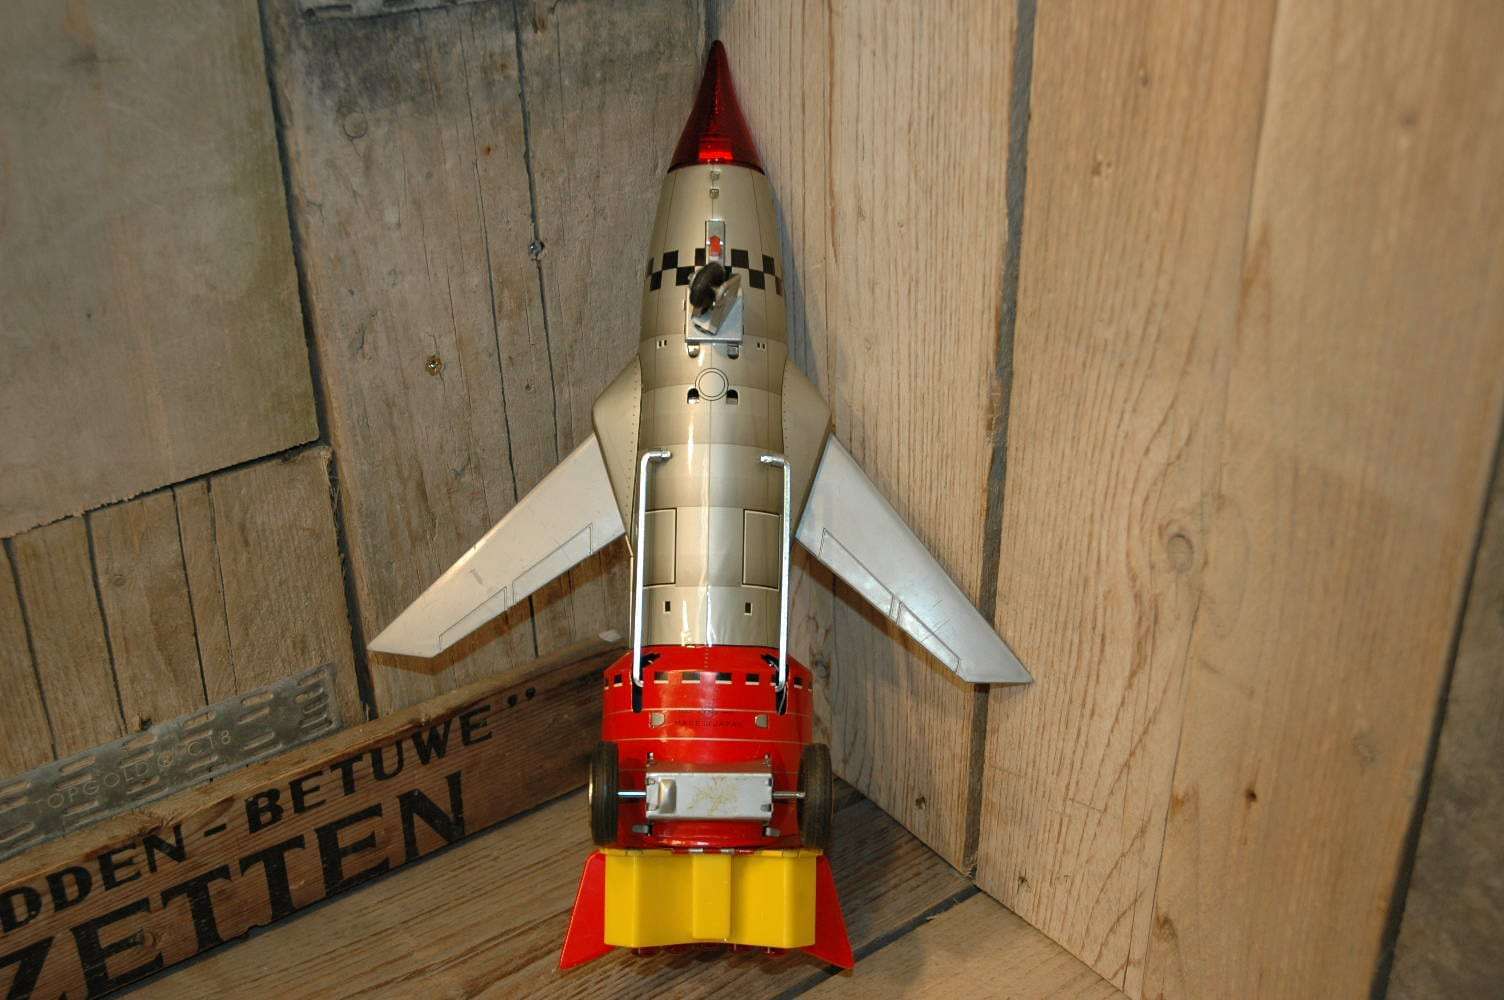 Nomura - Solar X Space Rocket